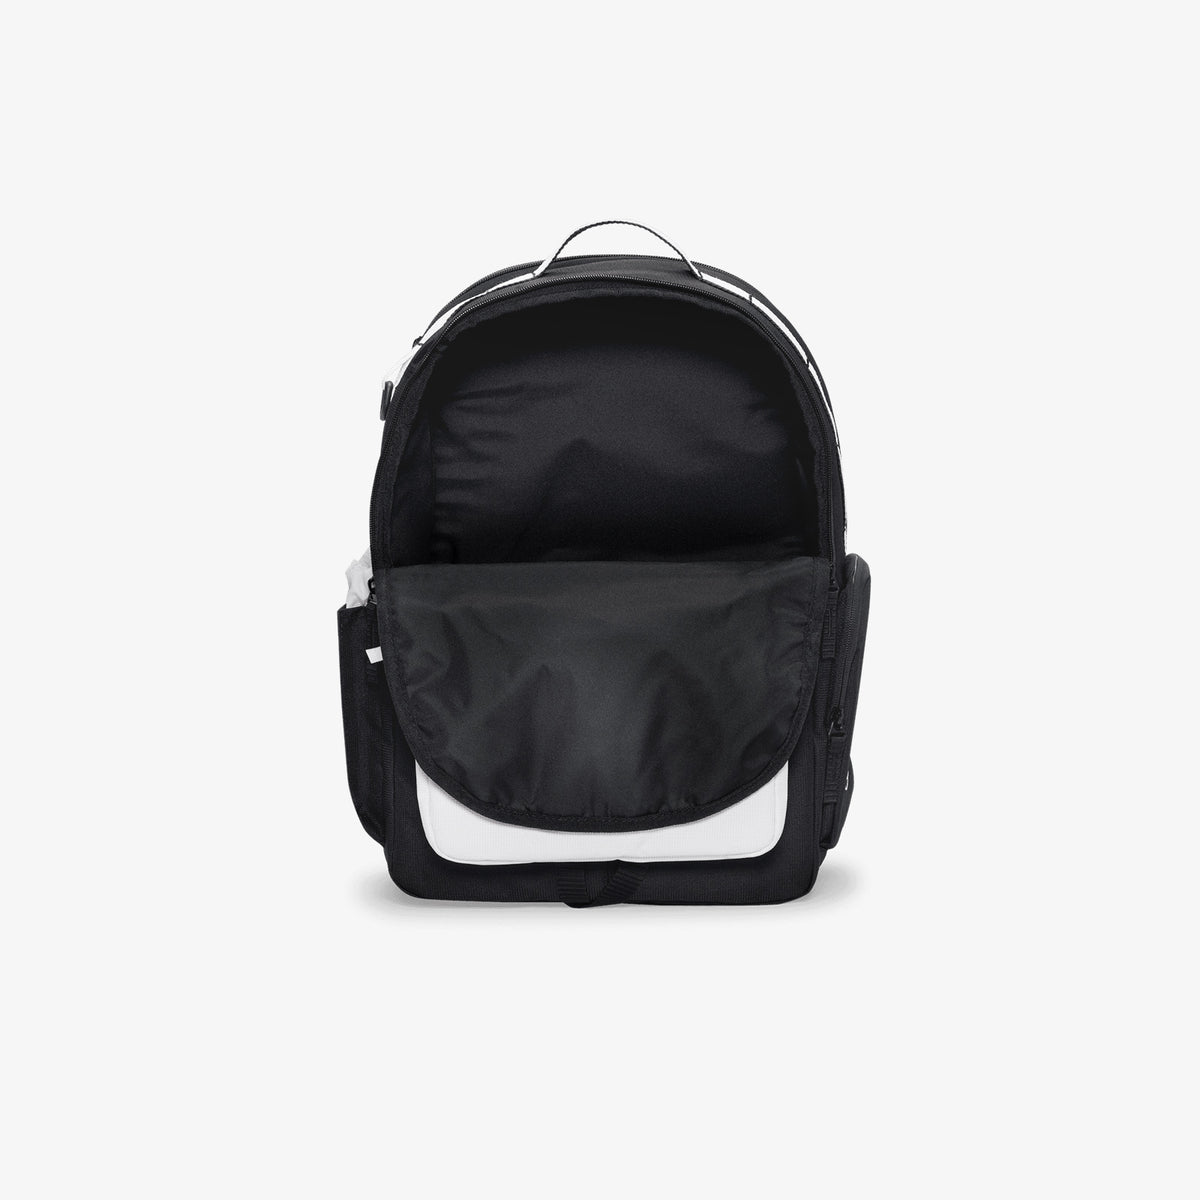 Kyrie 26L Backpack - Black/White